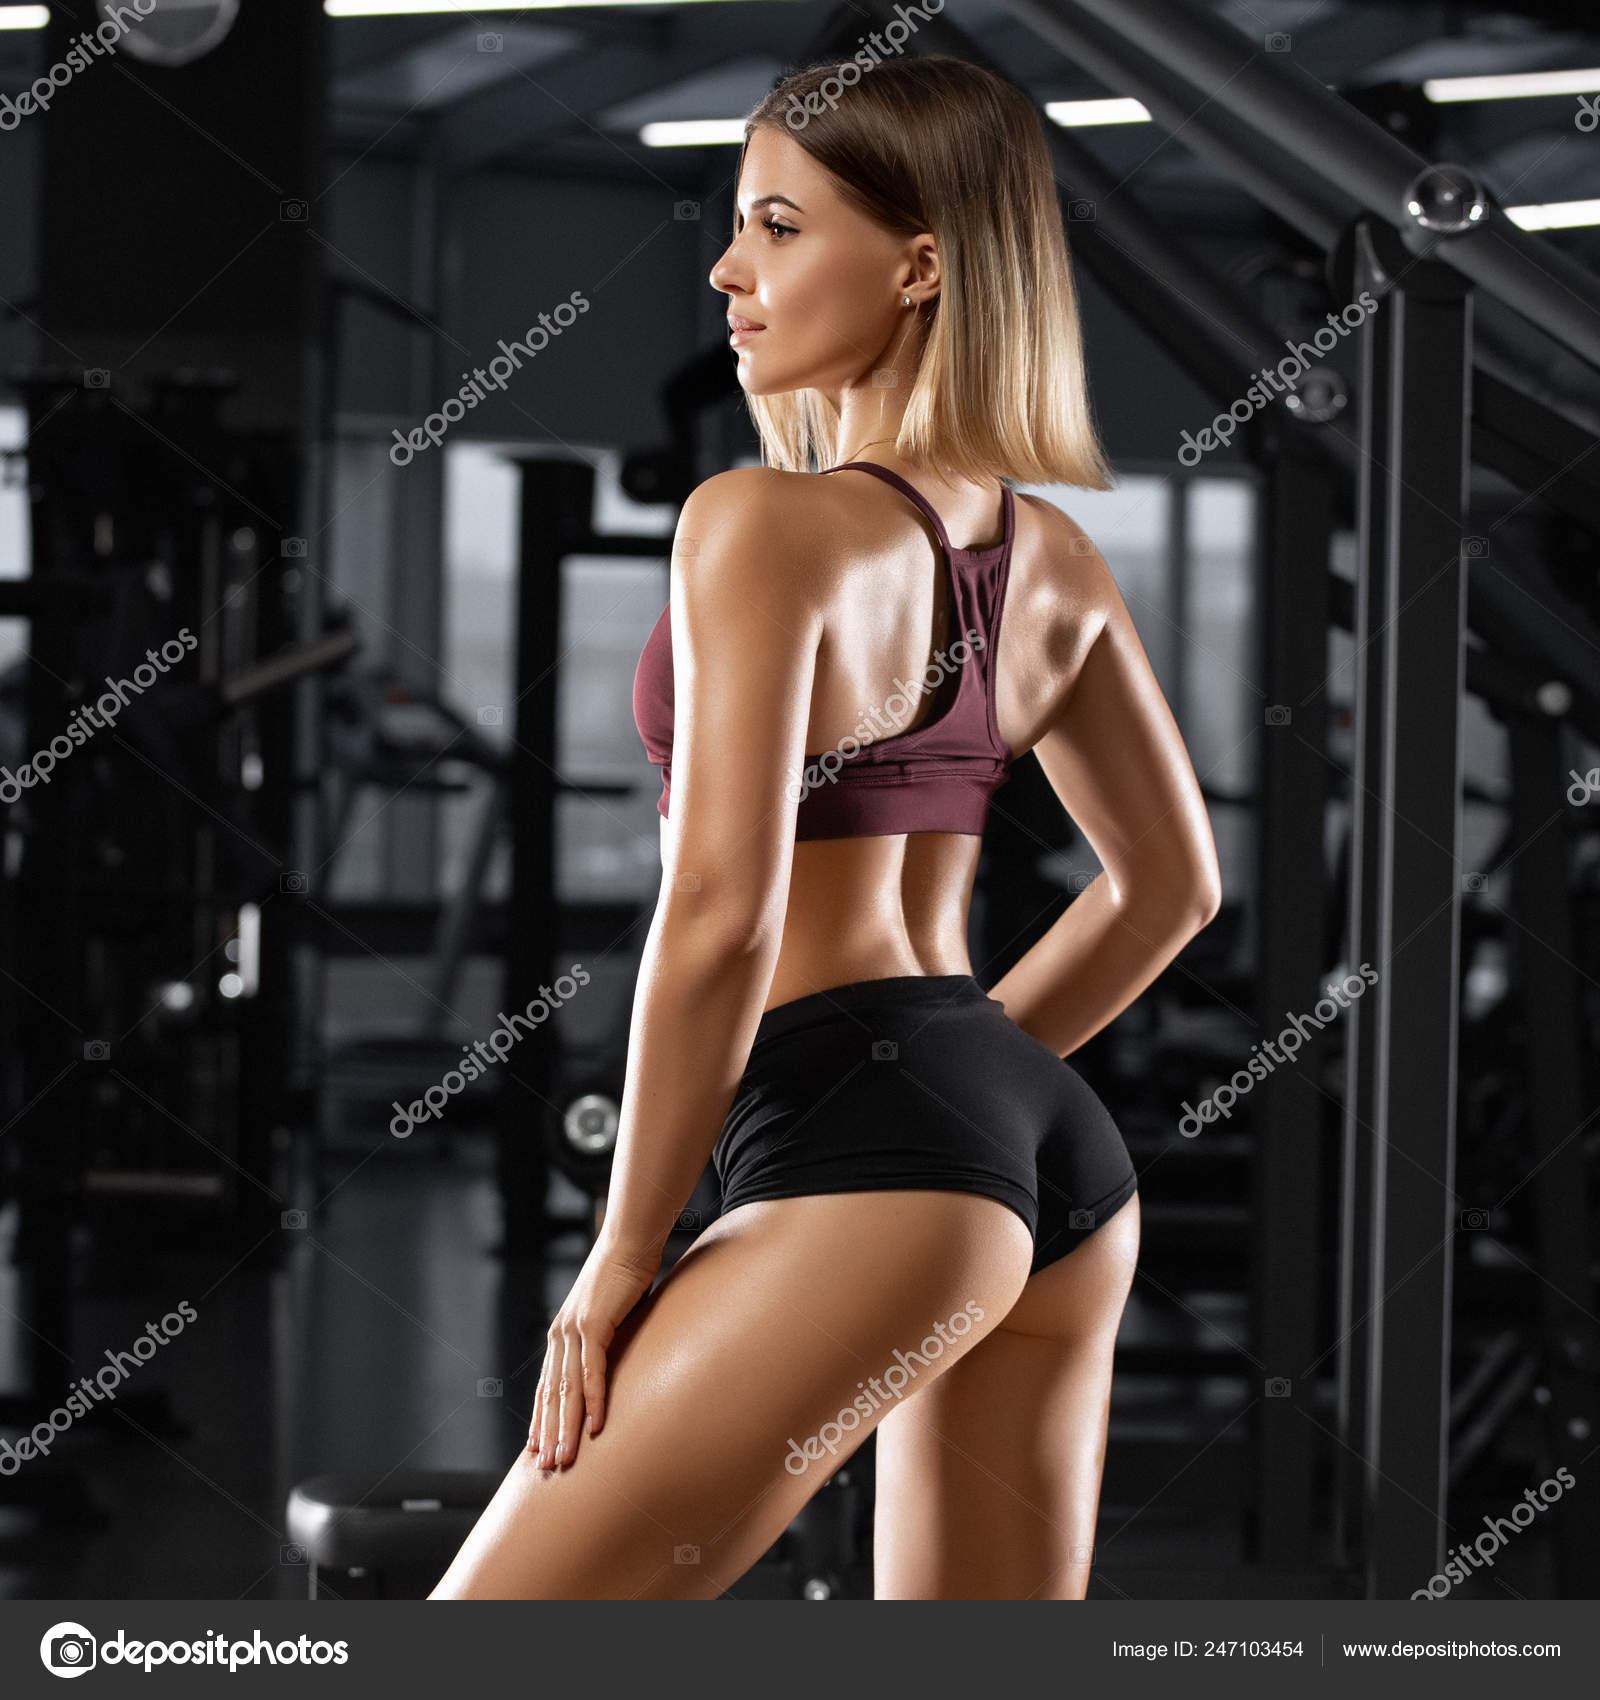 https://st4.depositphotos.com/3383955/24710/i/1600/depositphotos_247103454-stock-photo-sexy-athletic-girl-workout-gym.jpg